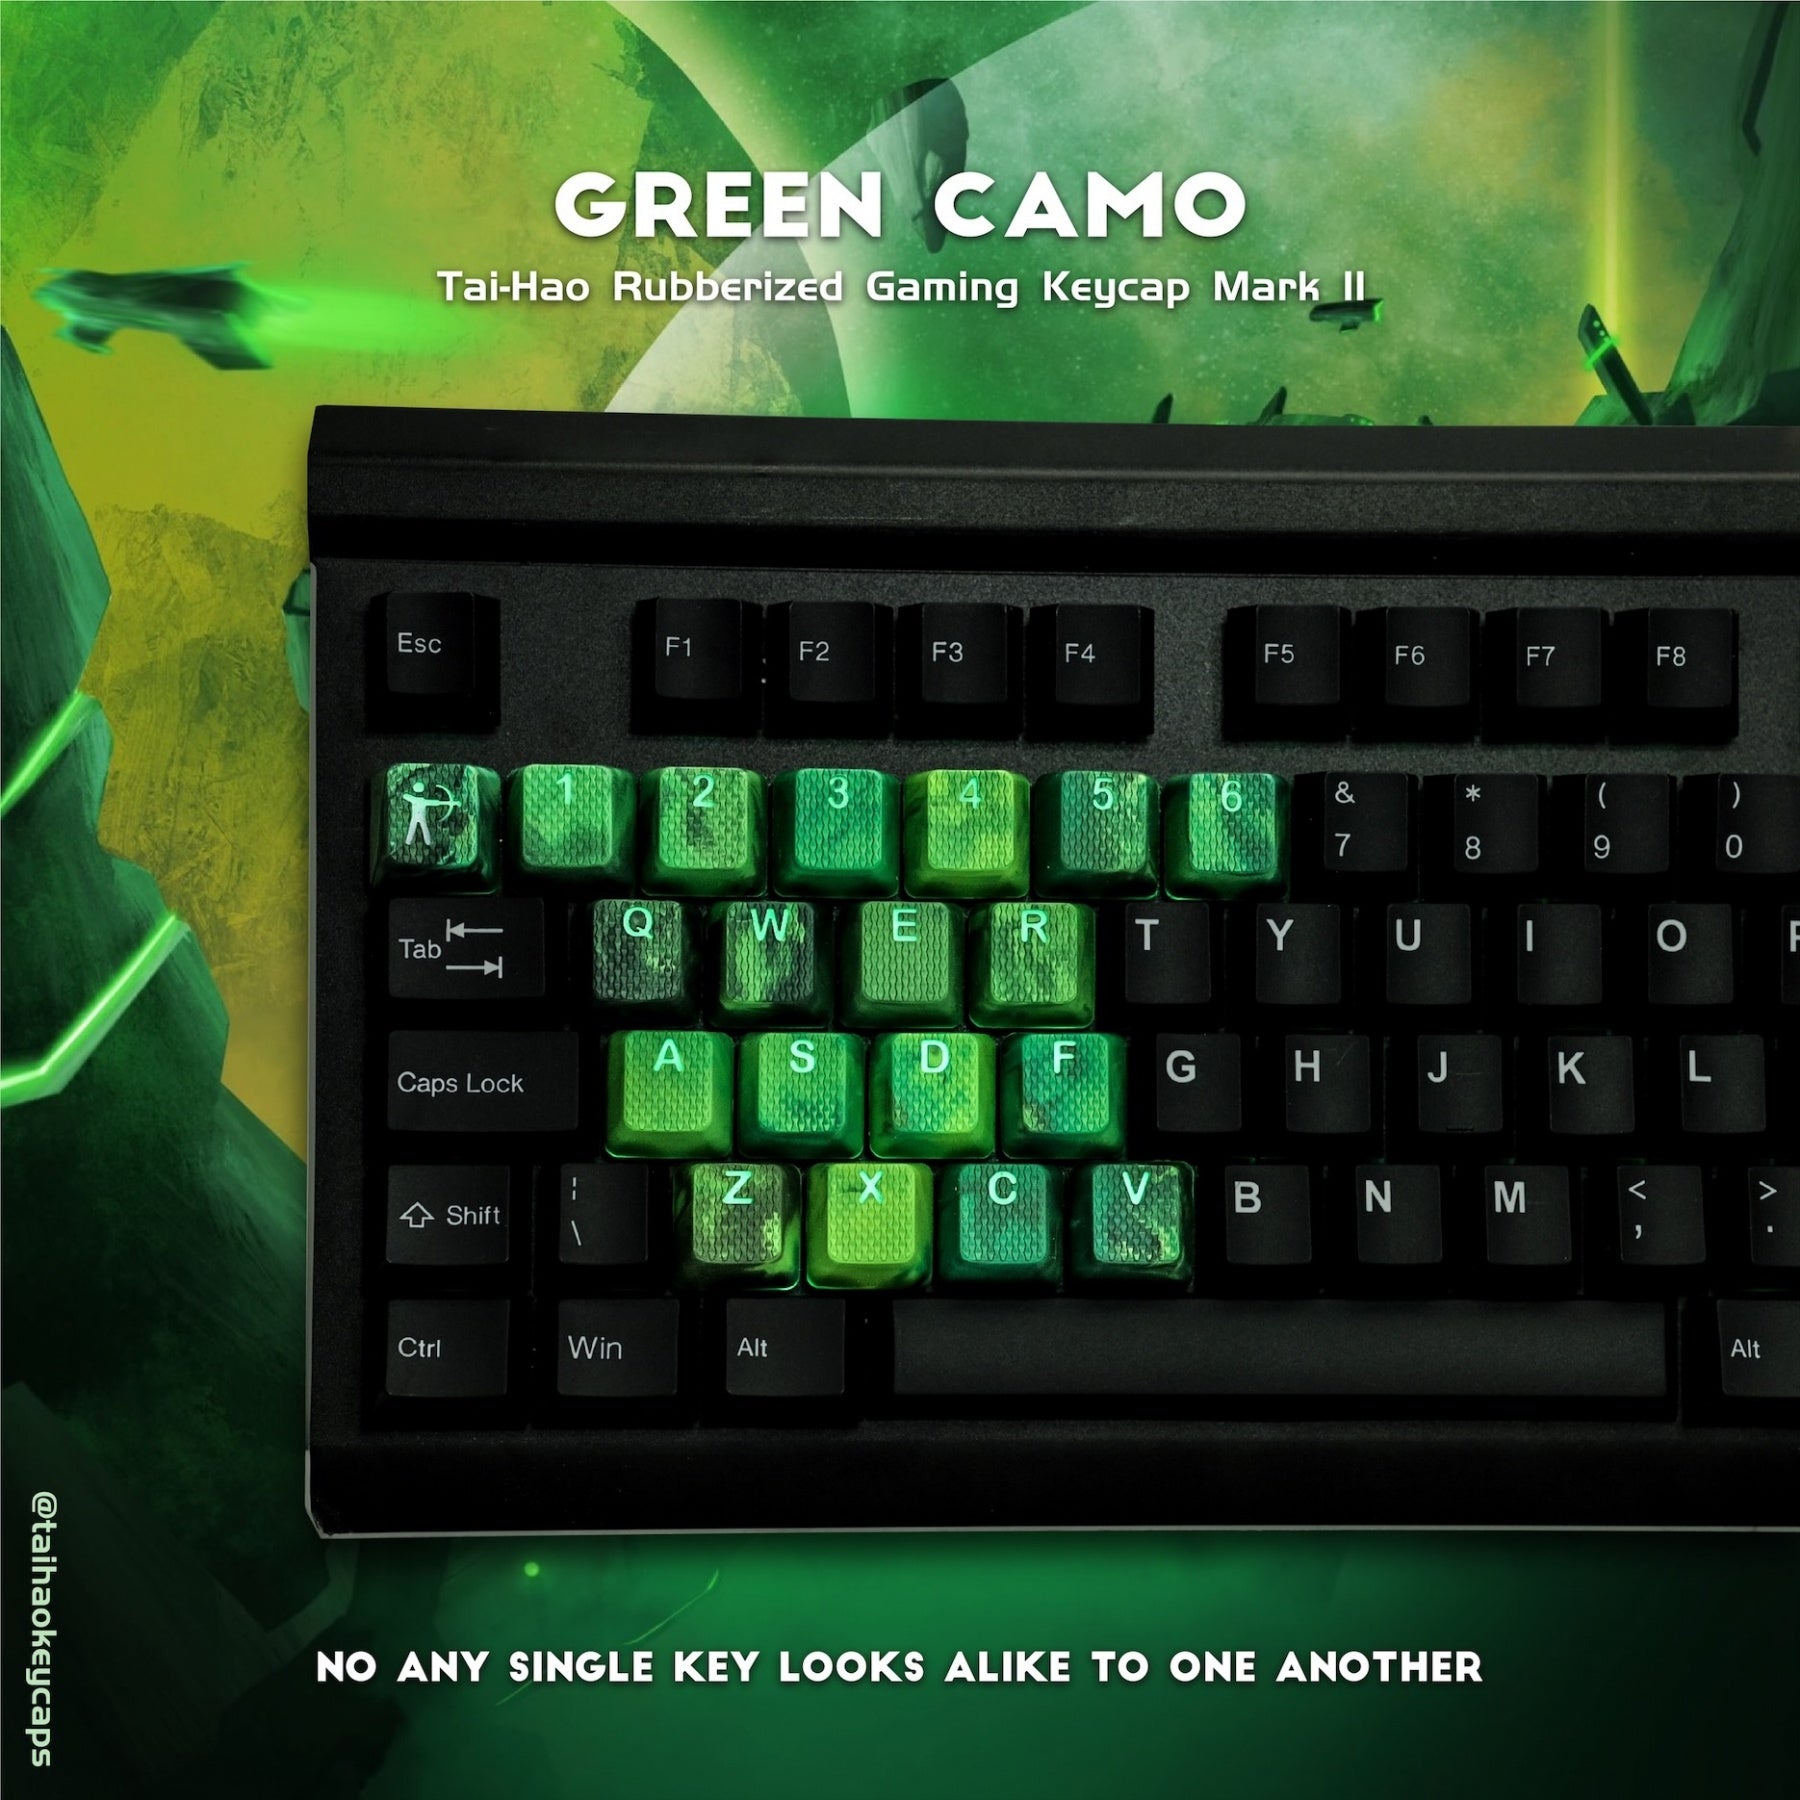 Tai-Hao 23-Key TPR Rubberized Gaming Keycap Set Green Camo Rubber MKOFXXHYW0 |28572|